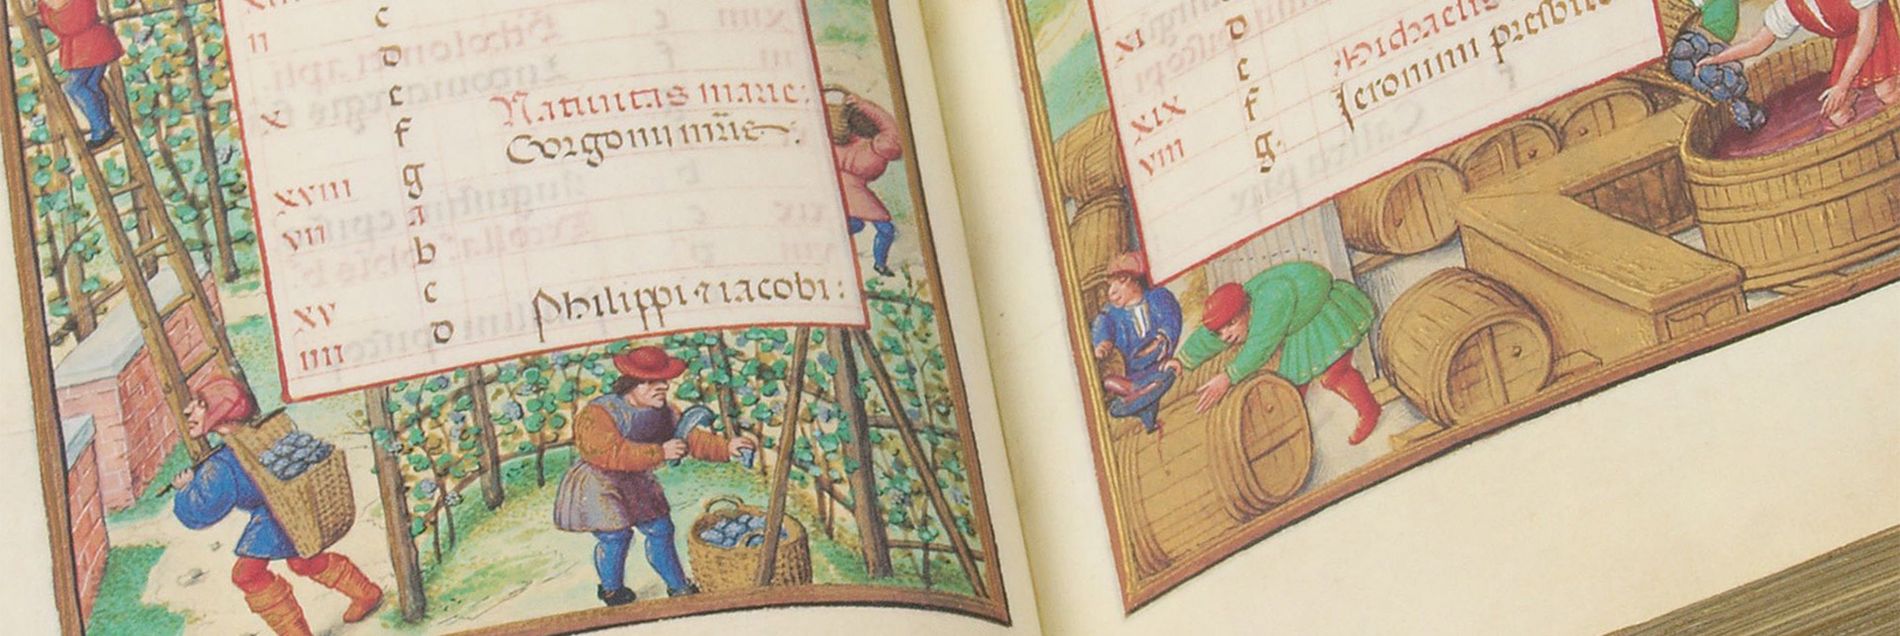 <i>“Perhaps the most imaginative masterpiece of Flemish book illumination”</i>